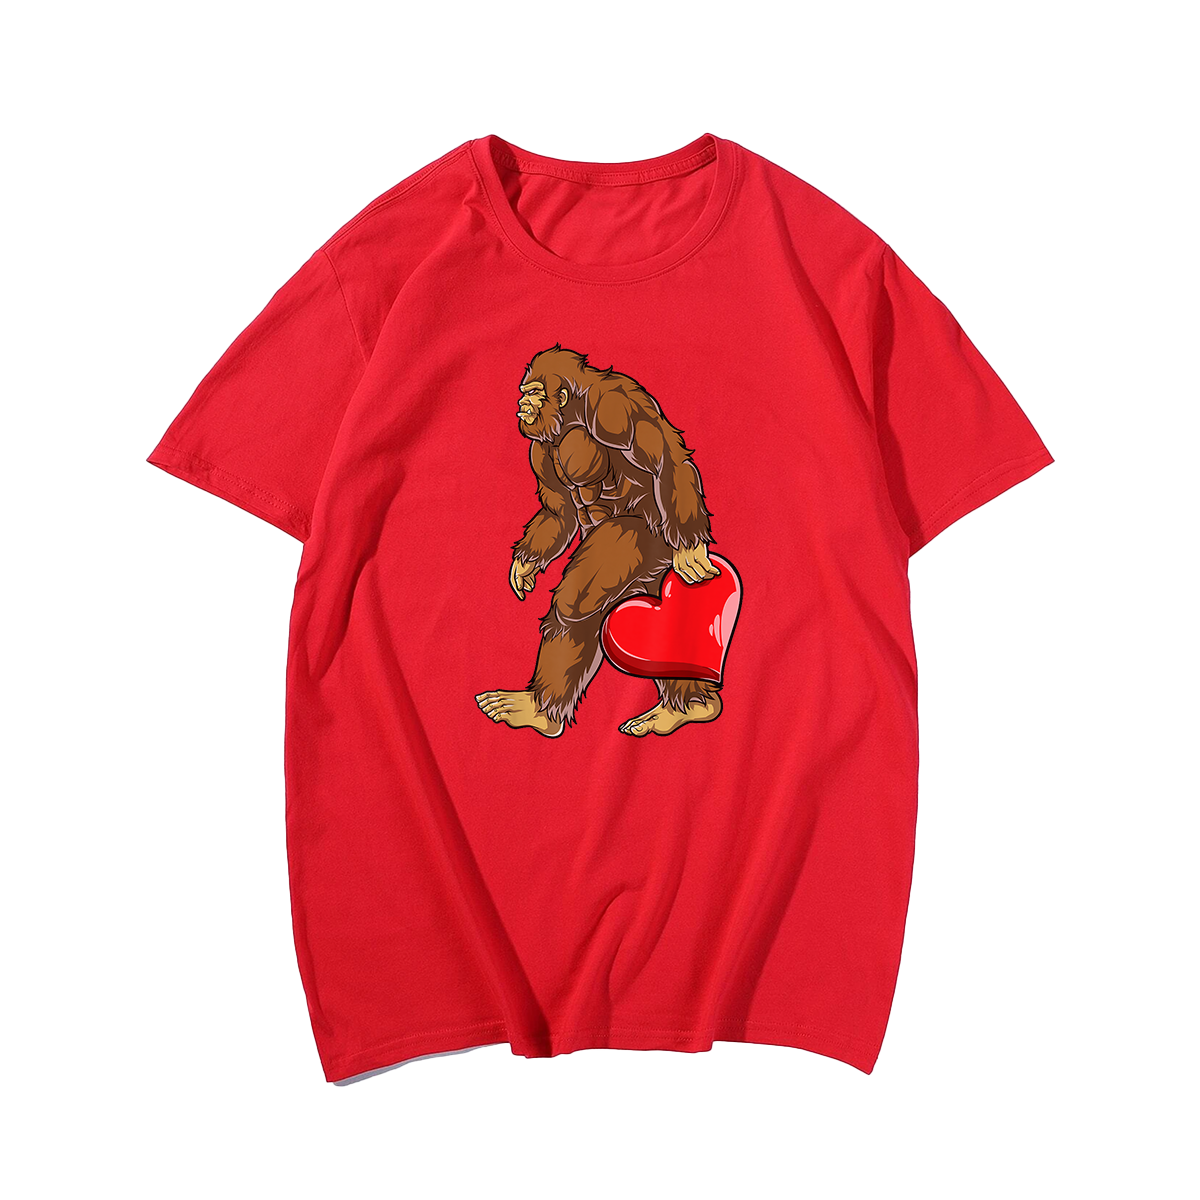 Bigfoot Heart T-Shirt, Men Plus Size Oversize T-shirt for Big & Tall